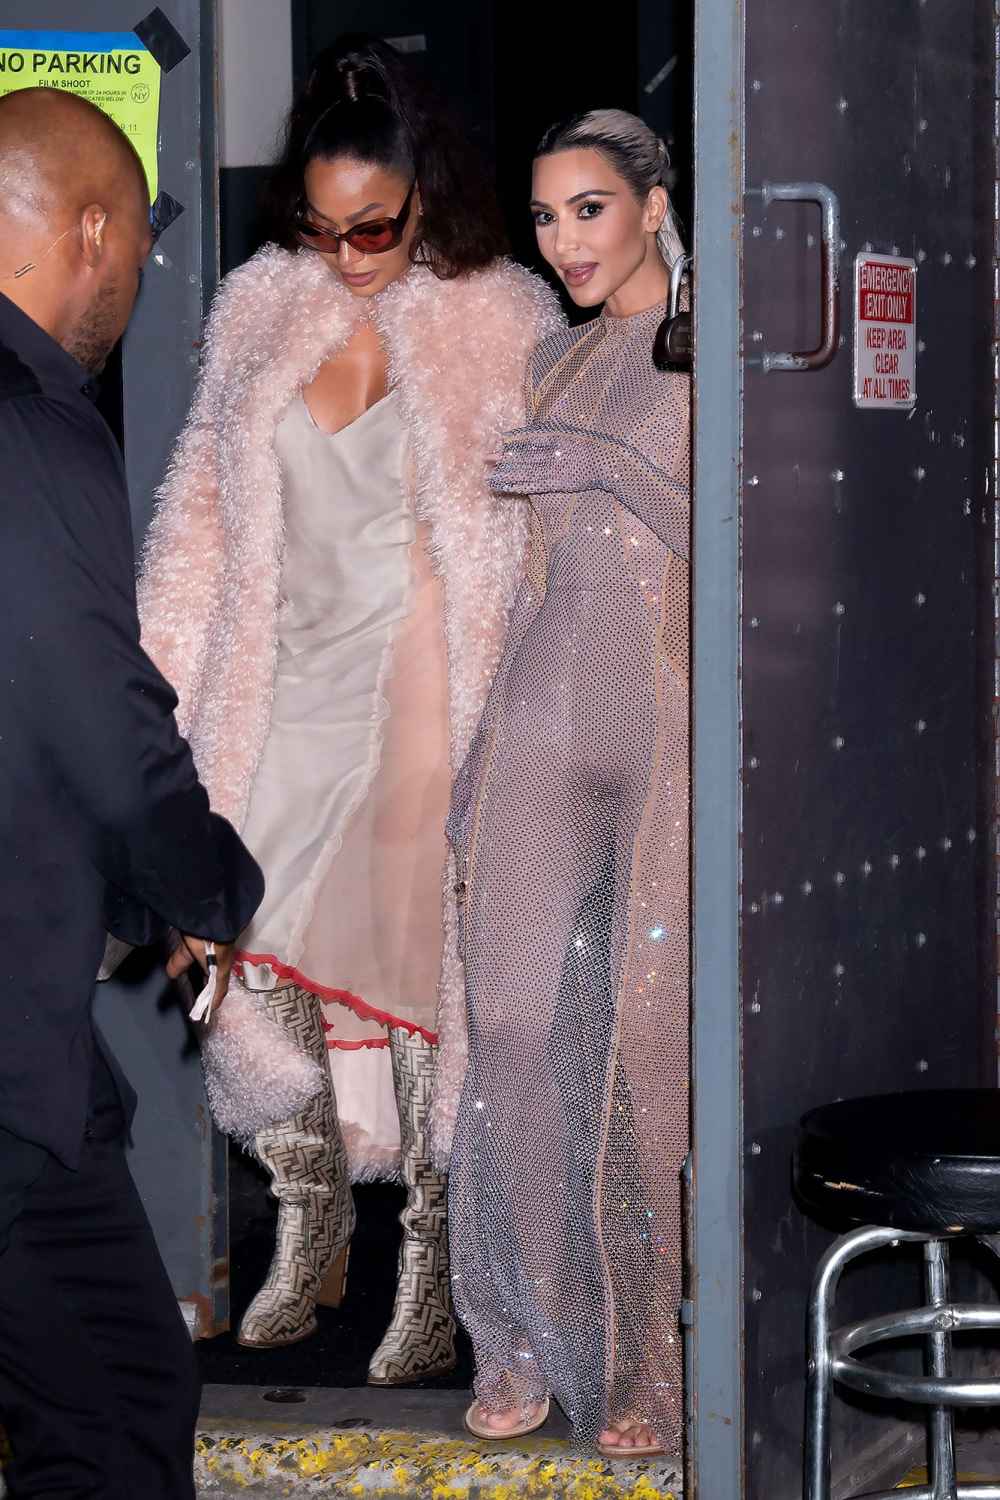 Is Louis Vuitton becoming the new Burberry as Kim Kardashian to